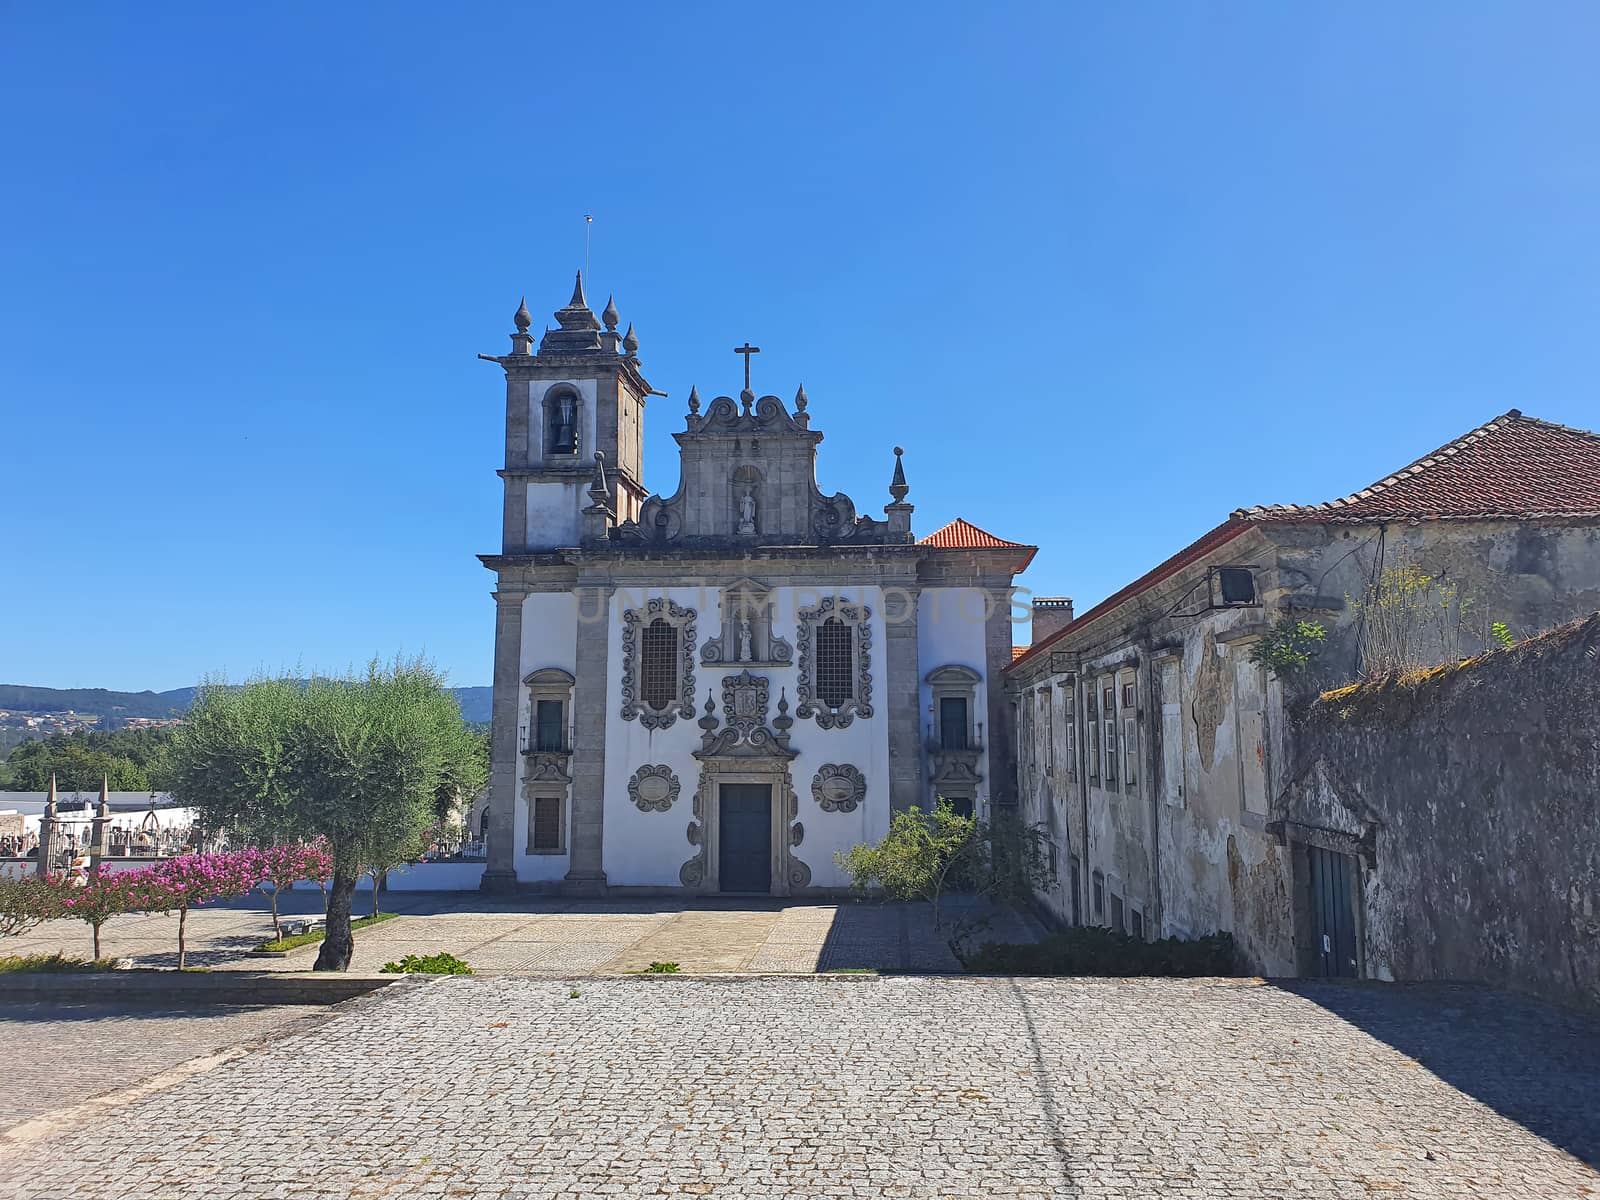 Historic Benedictine monastery for pilgrims by savcoco